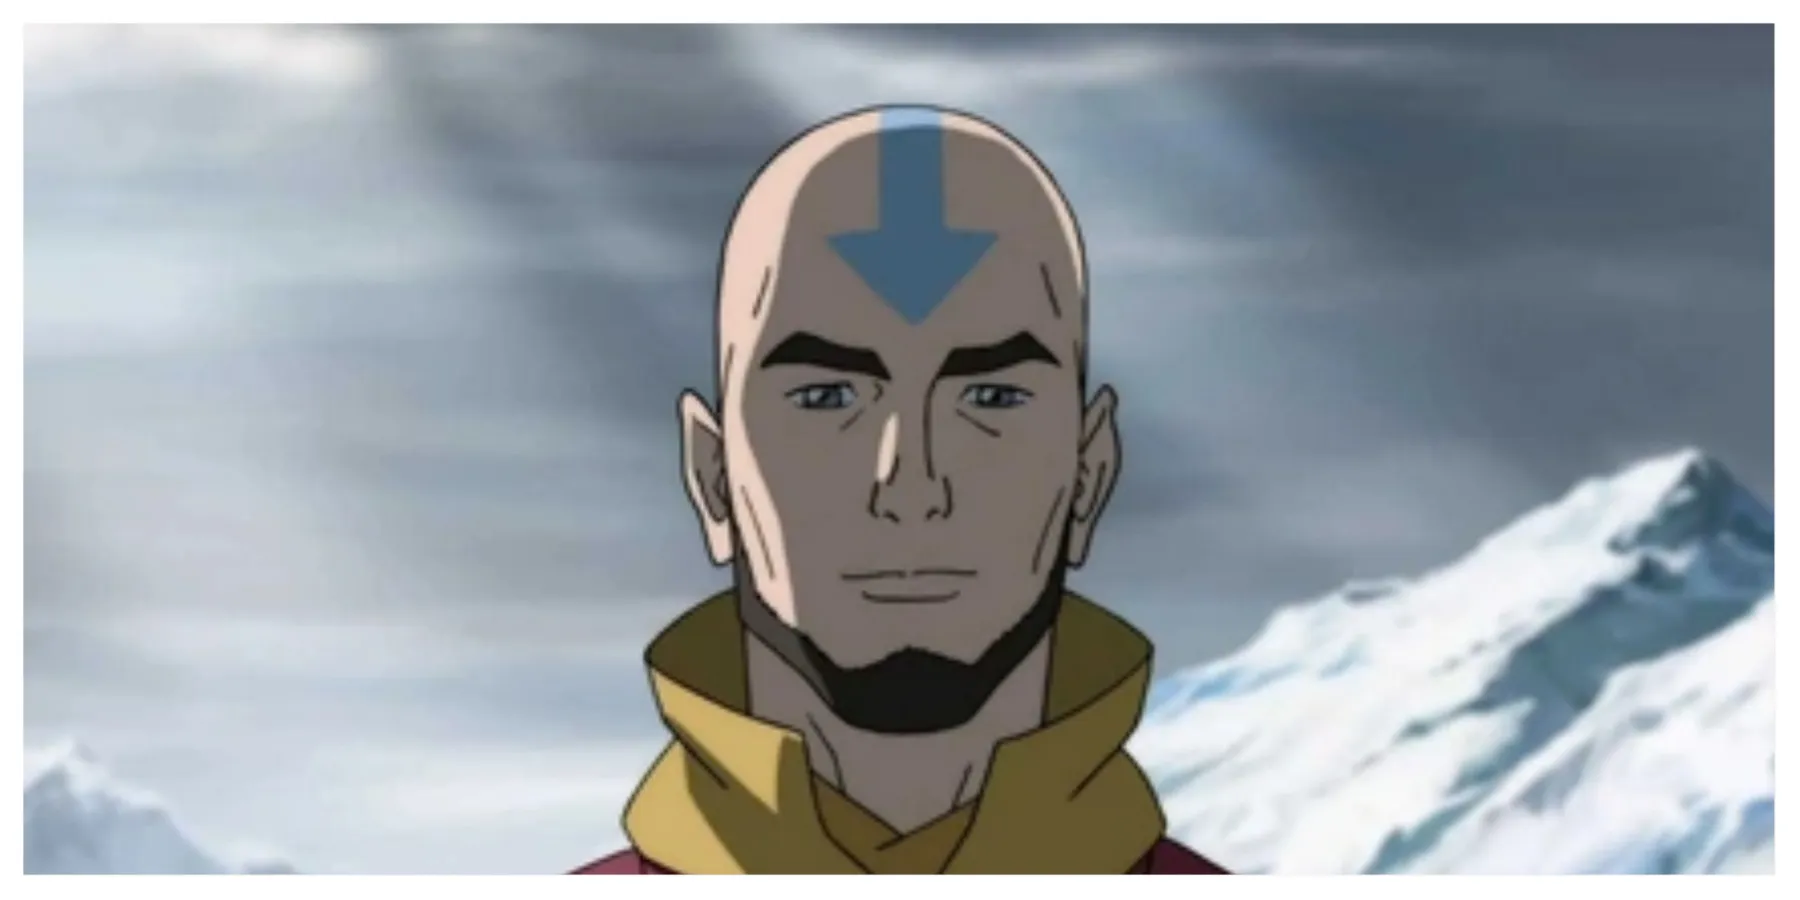 L'esprit de l'Avatar Aang parlant à Korra dans La Légende de Korra